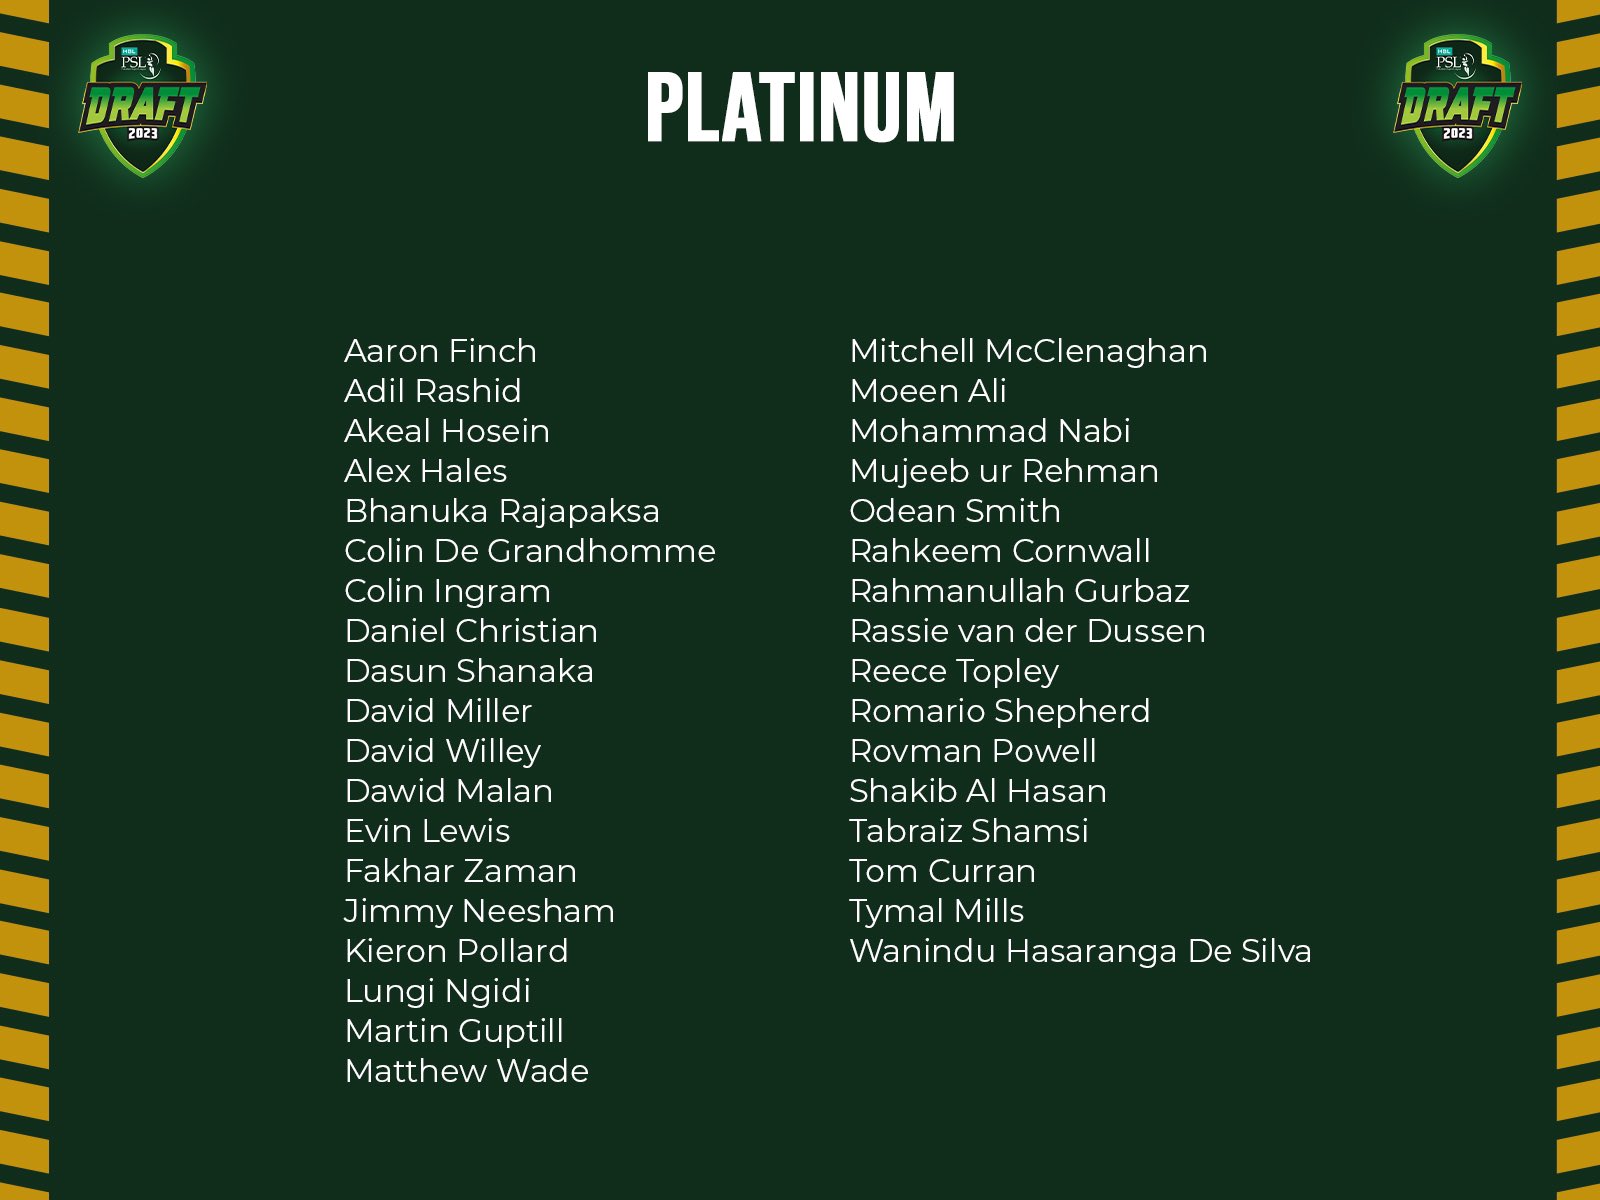 List of Platinum Players for PSL revealed Pakistan Observer